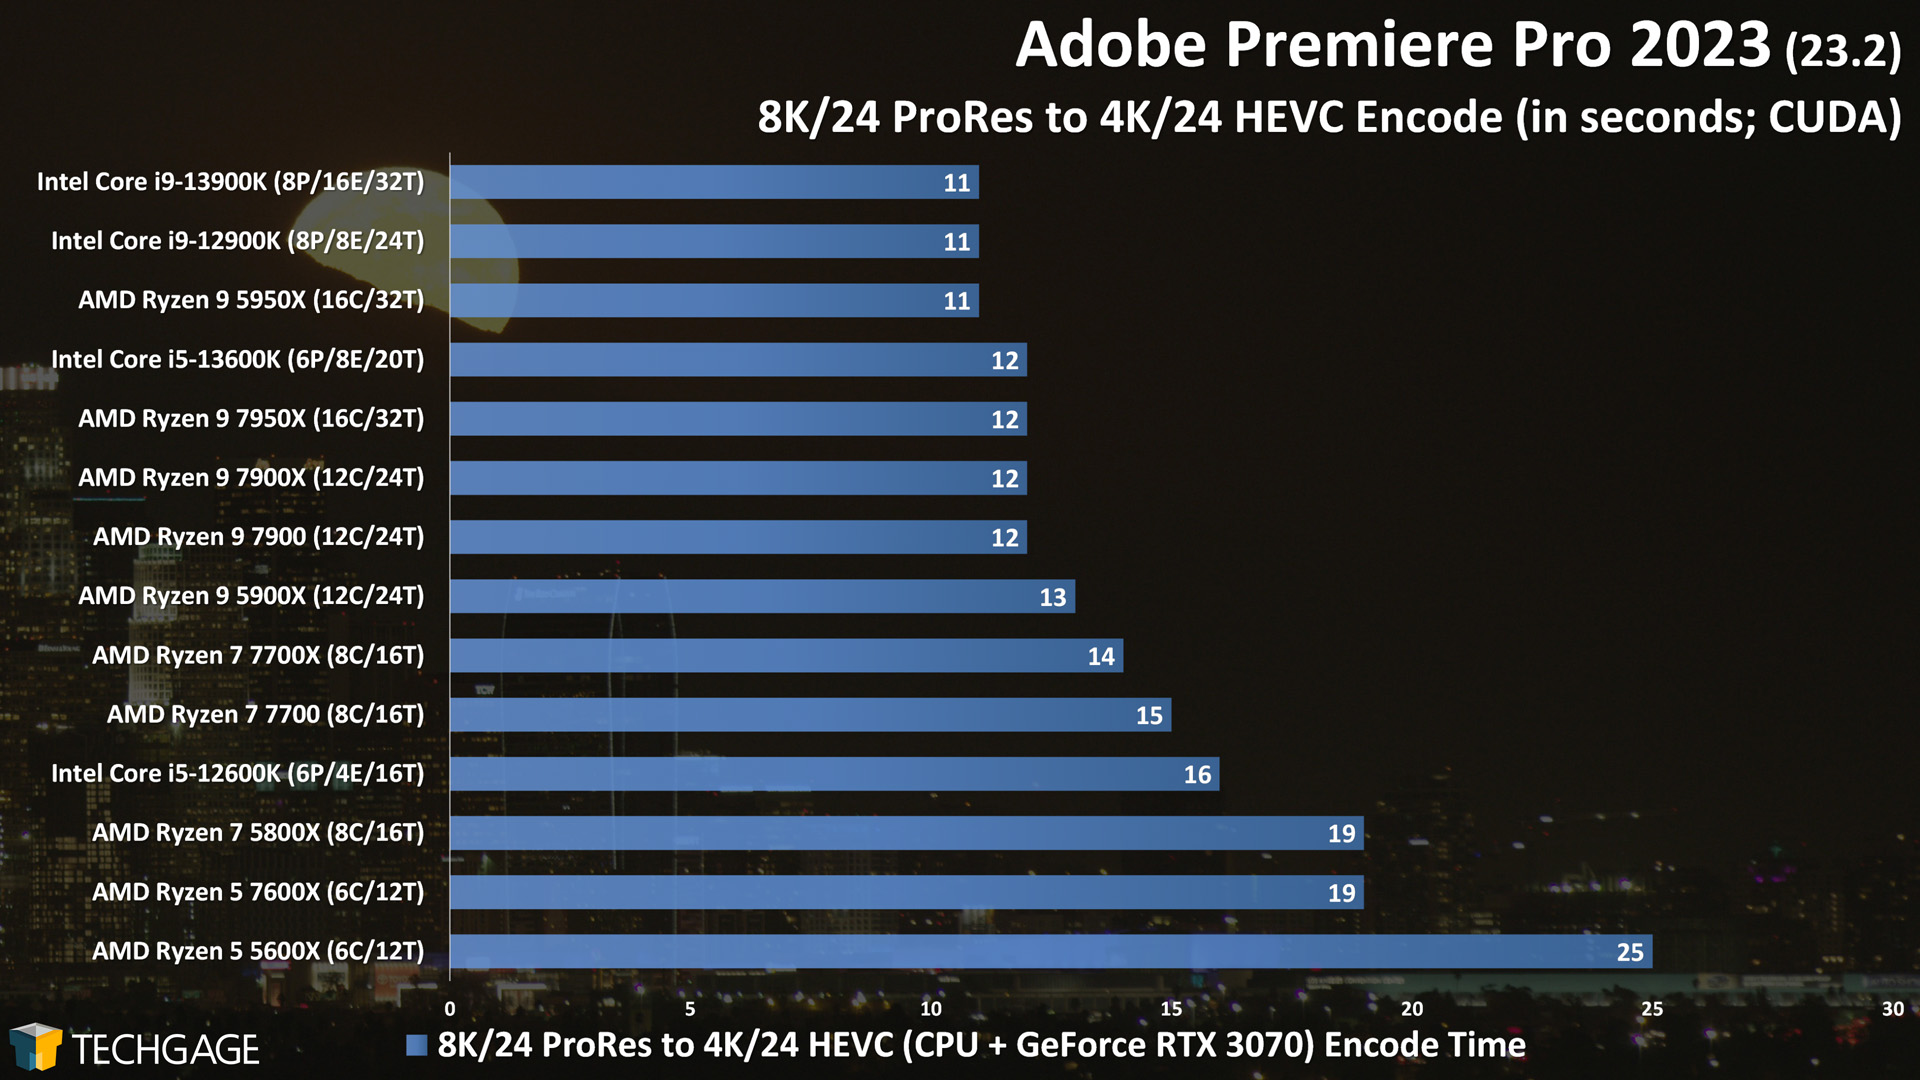 Adobe Premiere Pro - GPU Encoding Performance (8K24 ProRes to 4K24 HEVC)